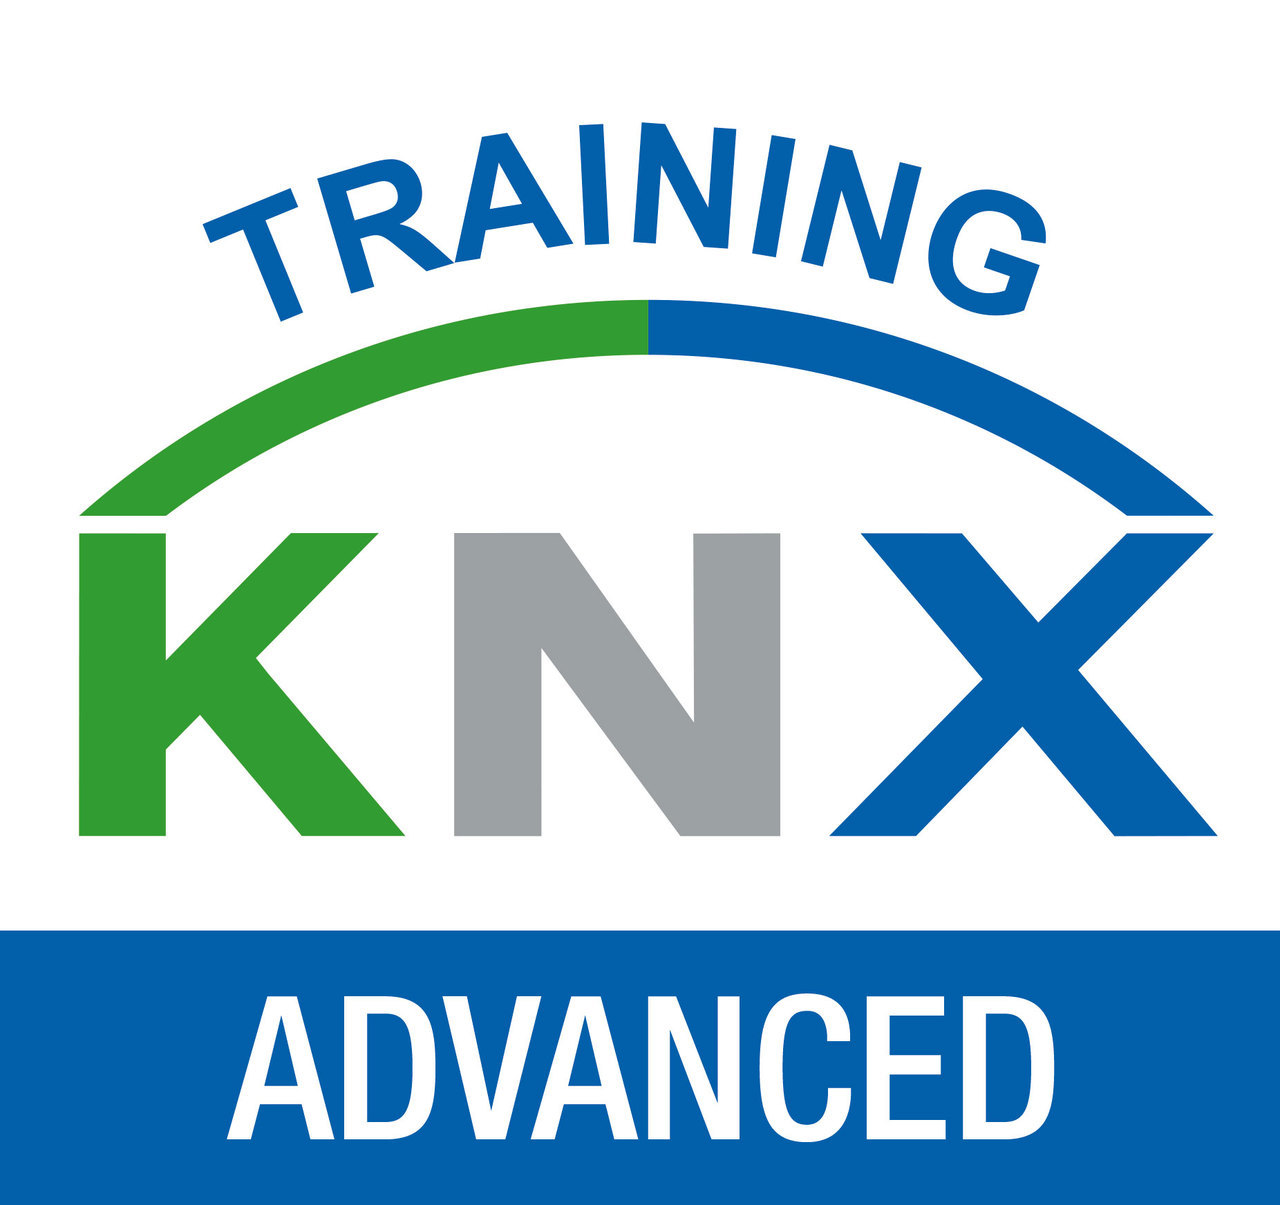 KNX Training ADVANCED logo